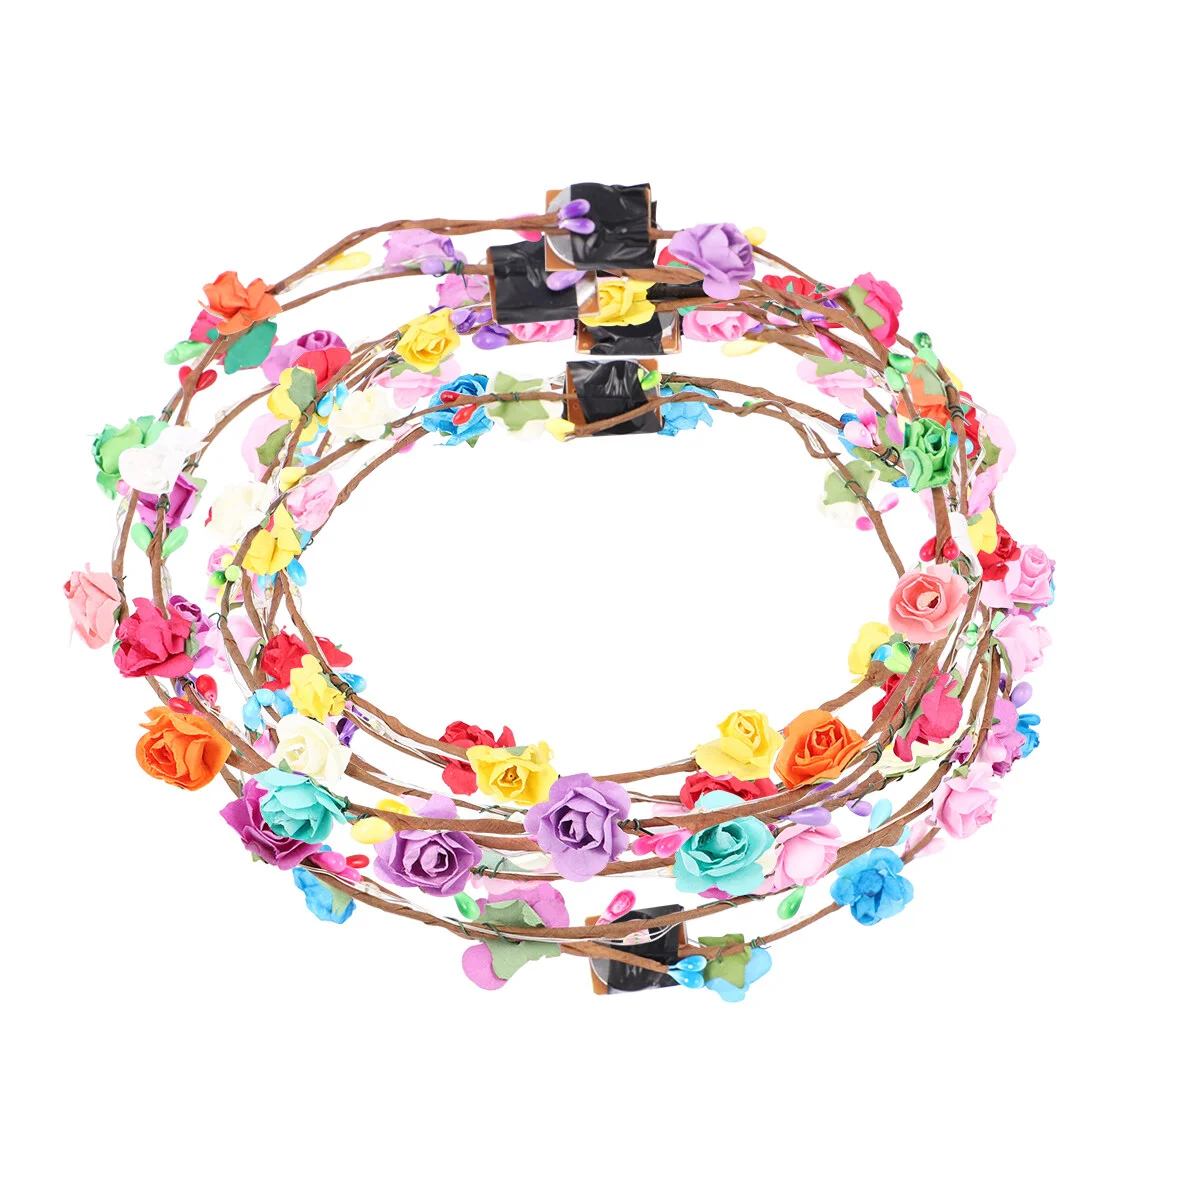 

9pcs LED Flower Wreath Headband Luminous Flower Headpiece Wedding Festival Holiday Party Headdress for Ladies ( Mixed Color )